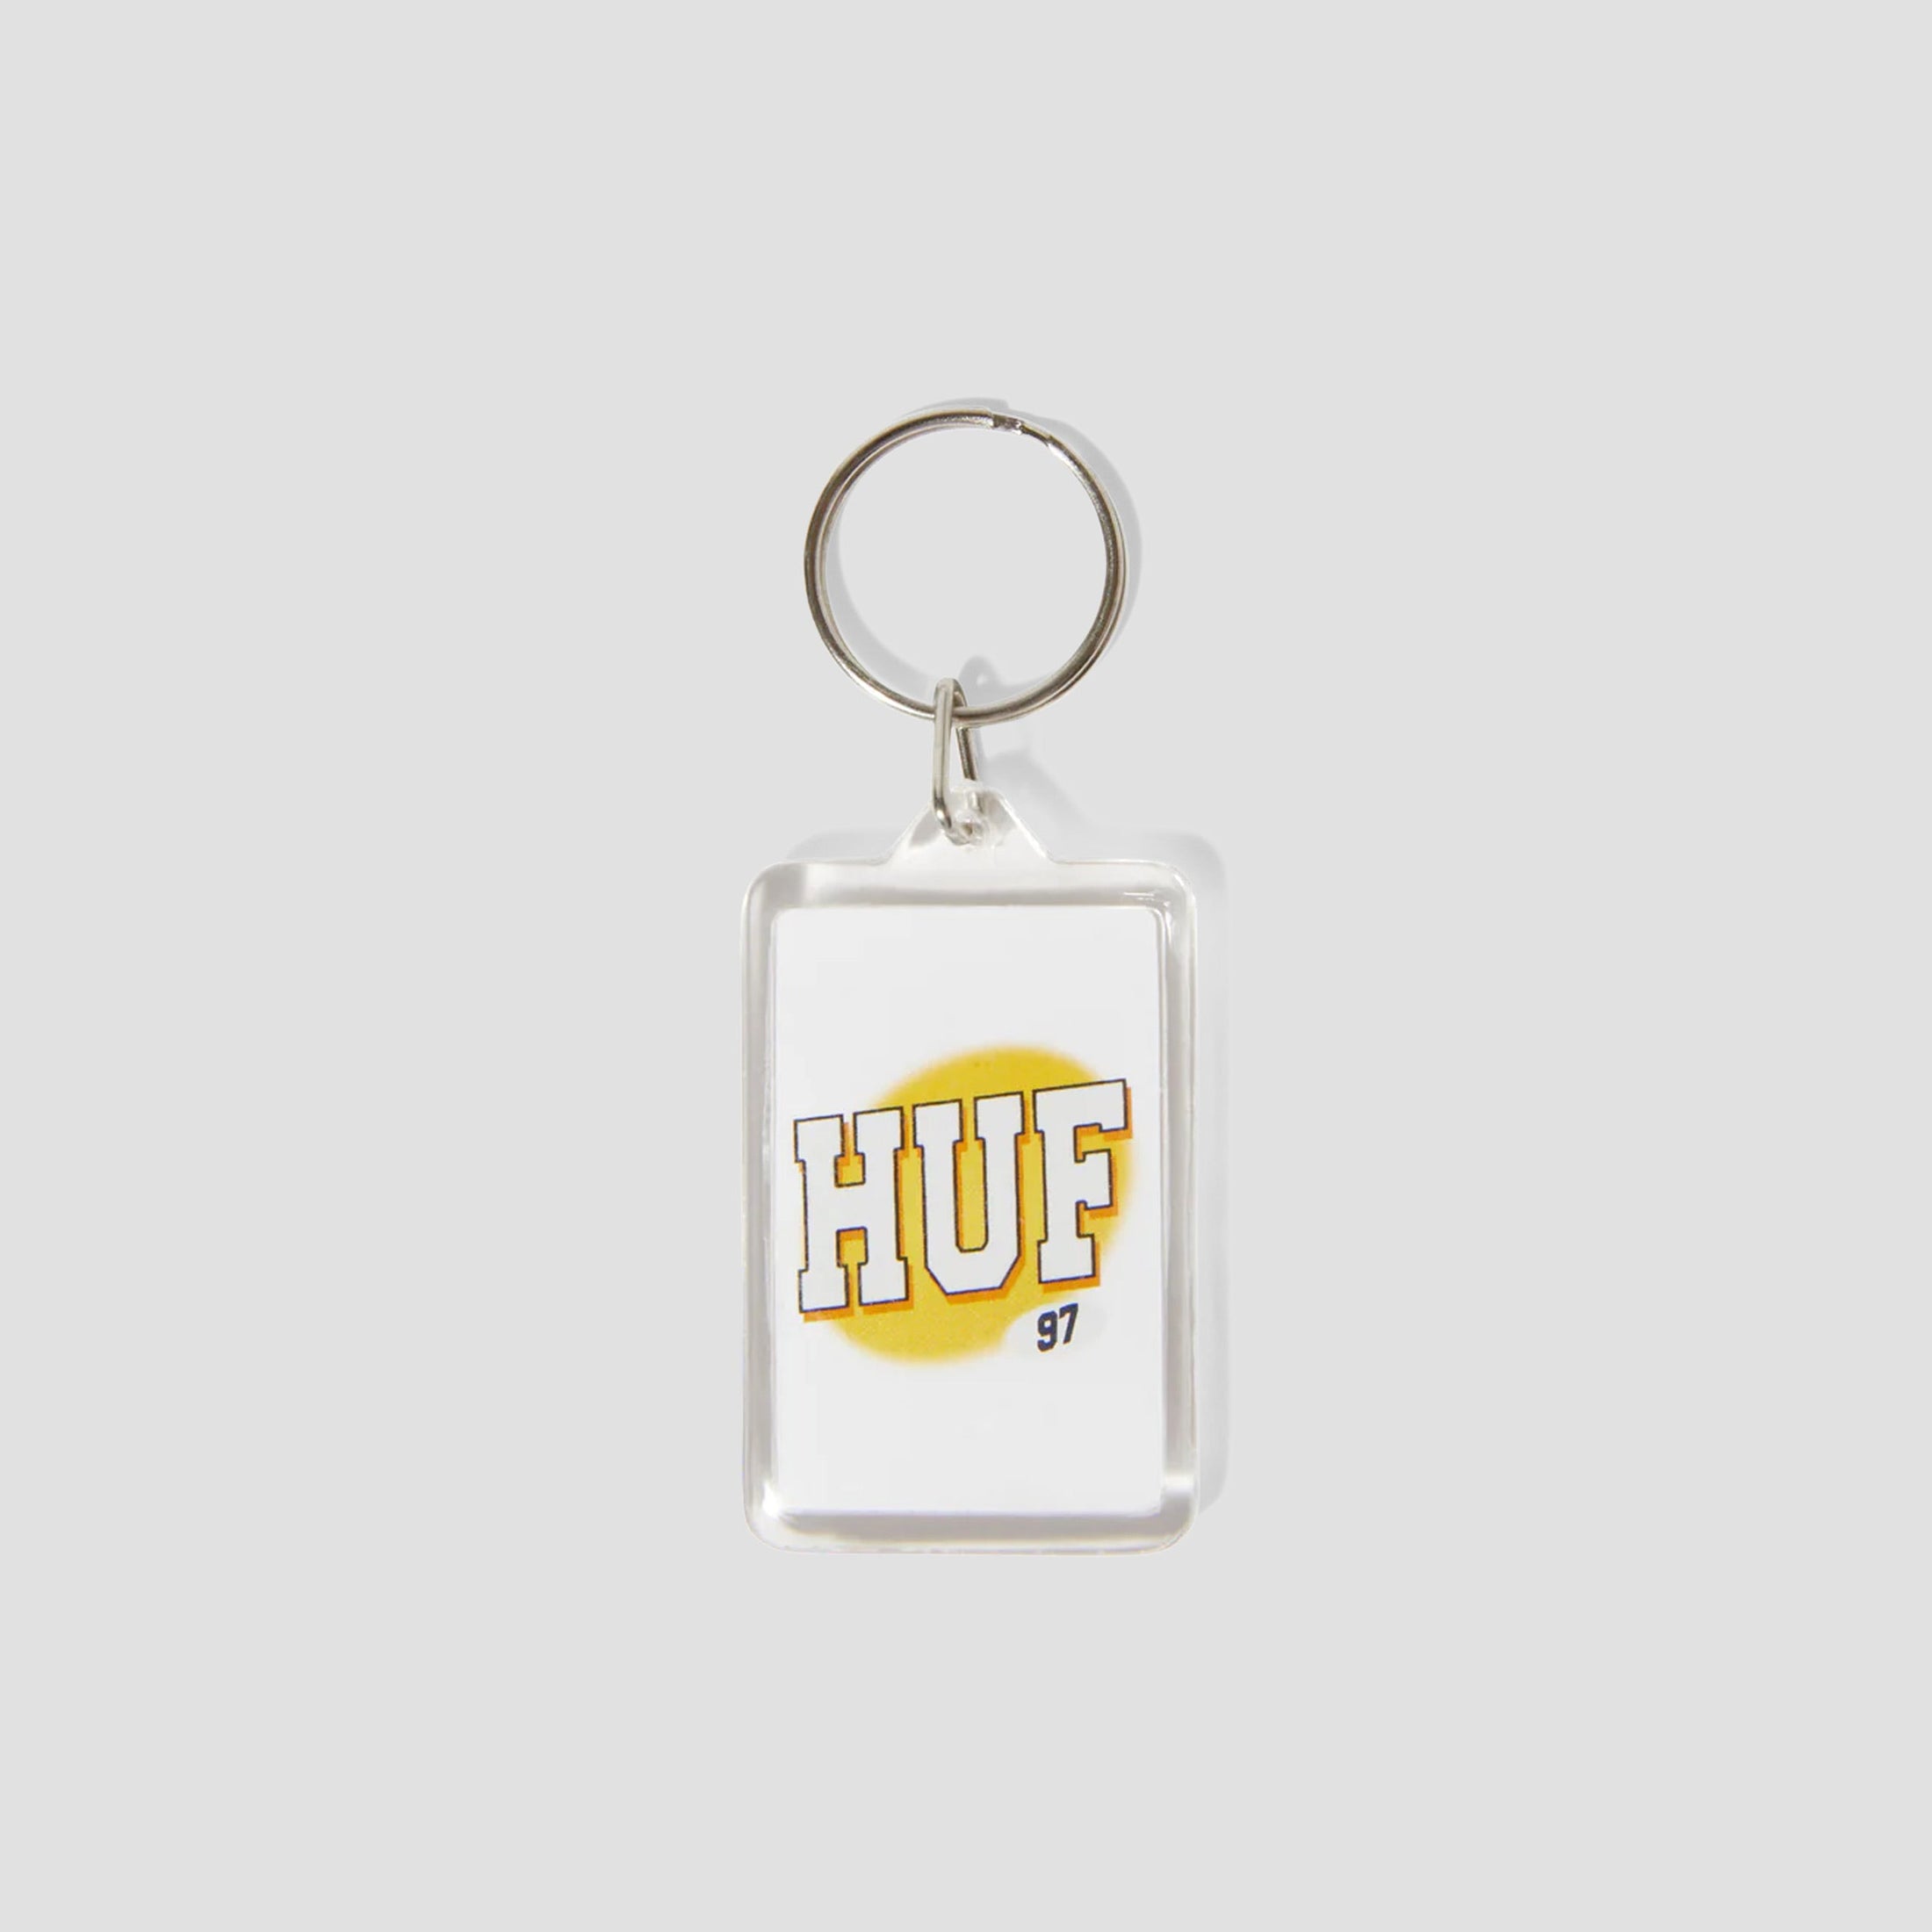 HUF 97 Keychain White